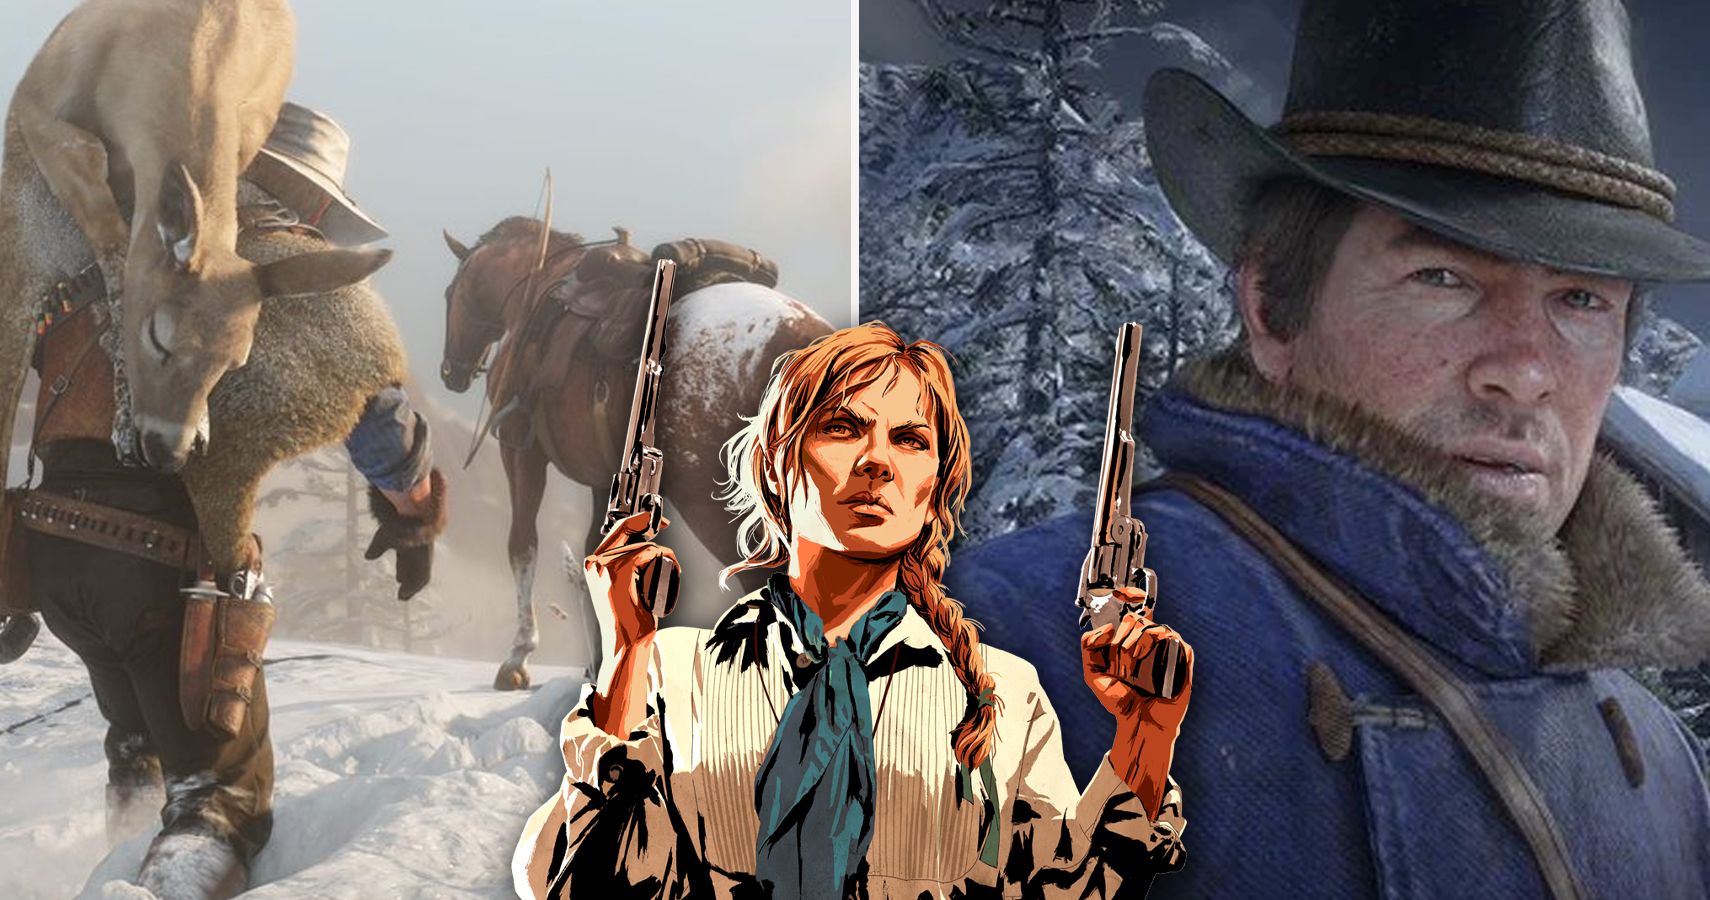 Arthur Morgan - Red Dead Redemption 2 Guide - IGN